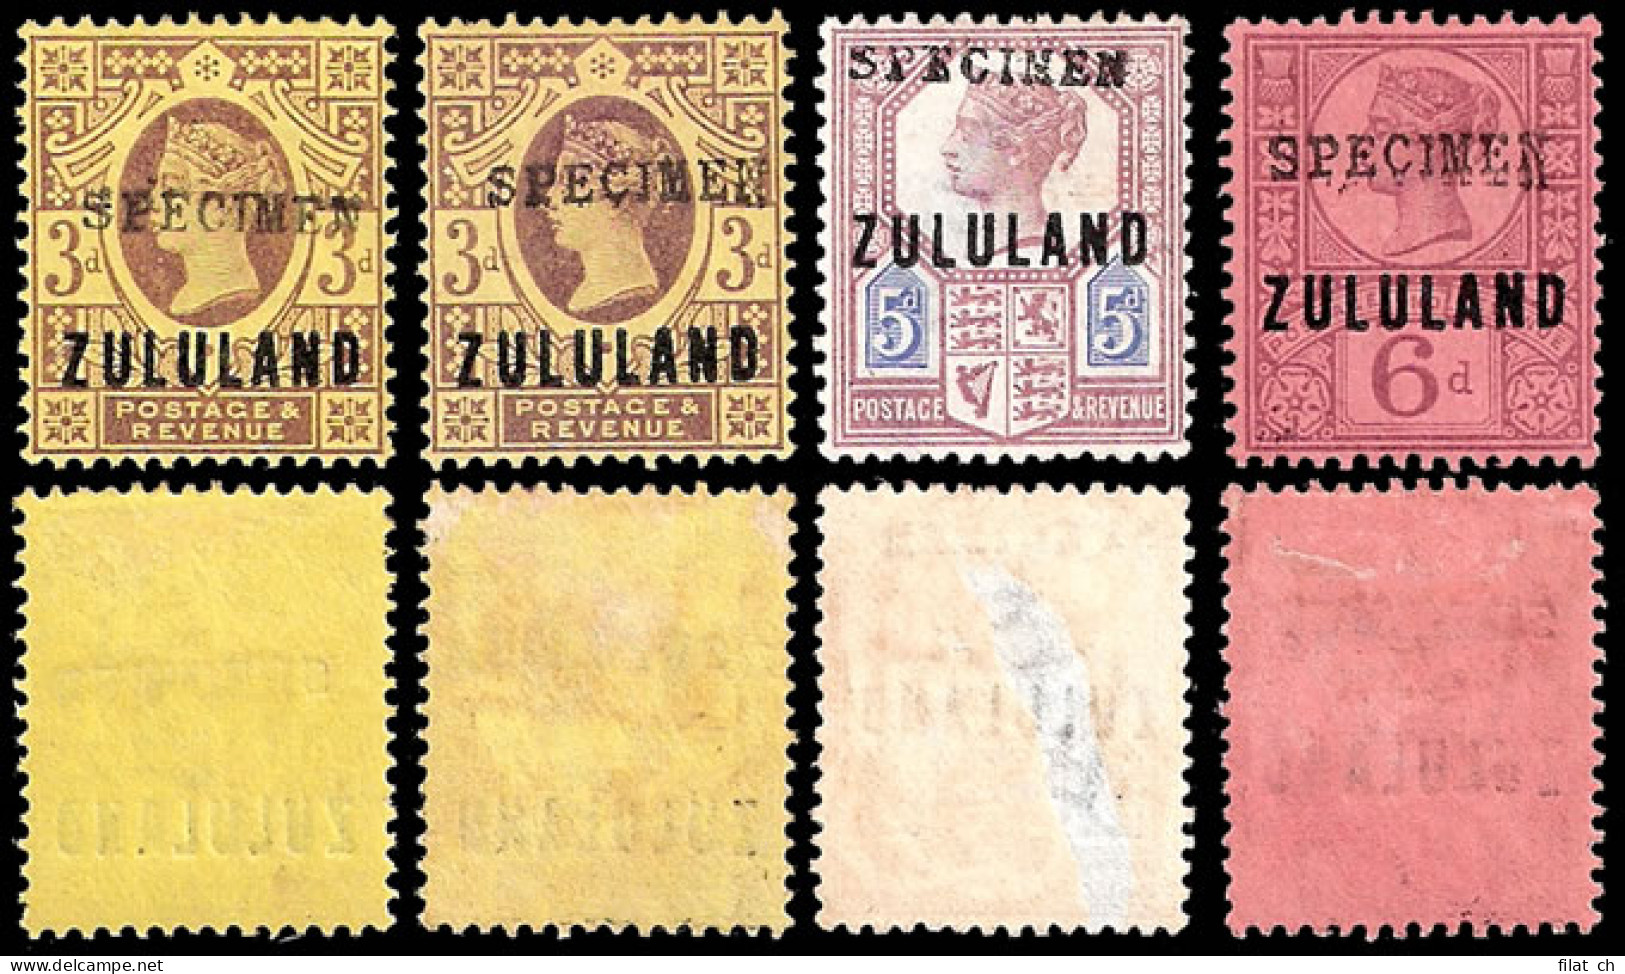 Zululand 1888 3d, 5d & 6d GB9 Somerset House Specimens - Zoulouland (1888-1902)